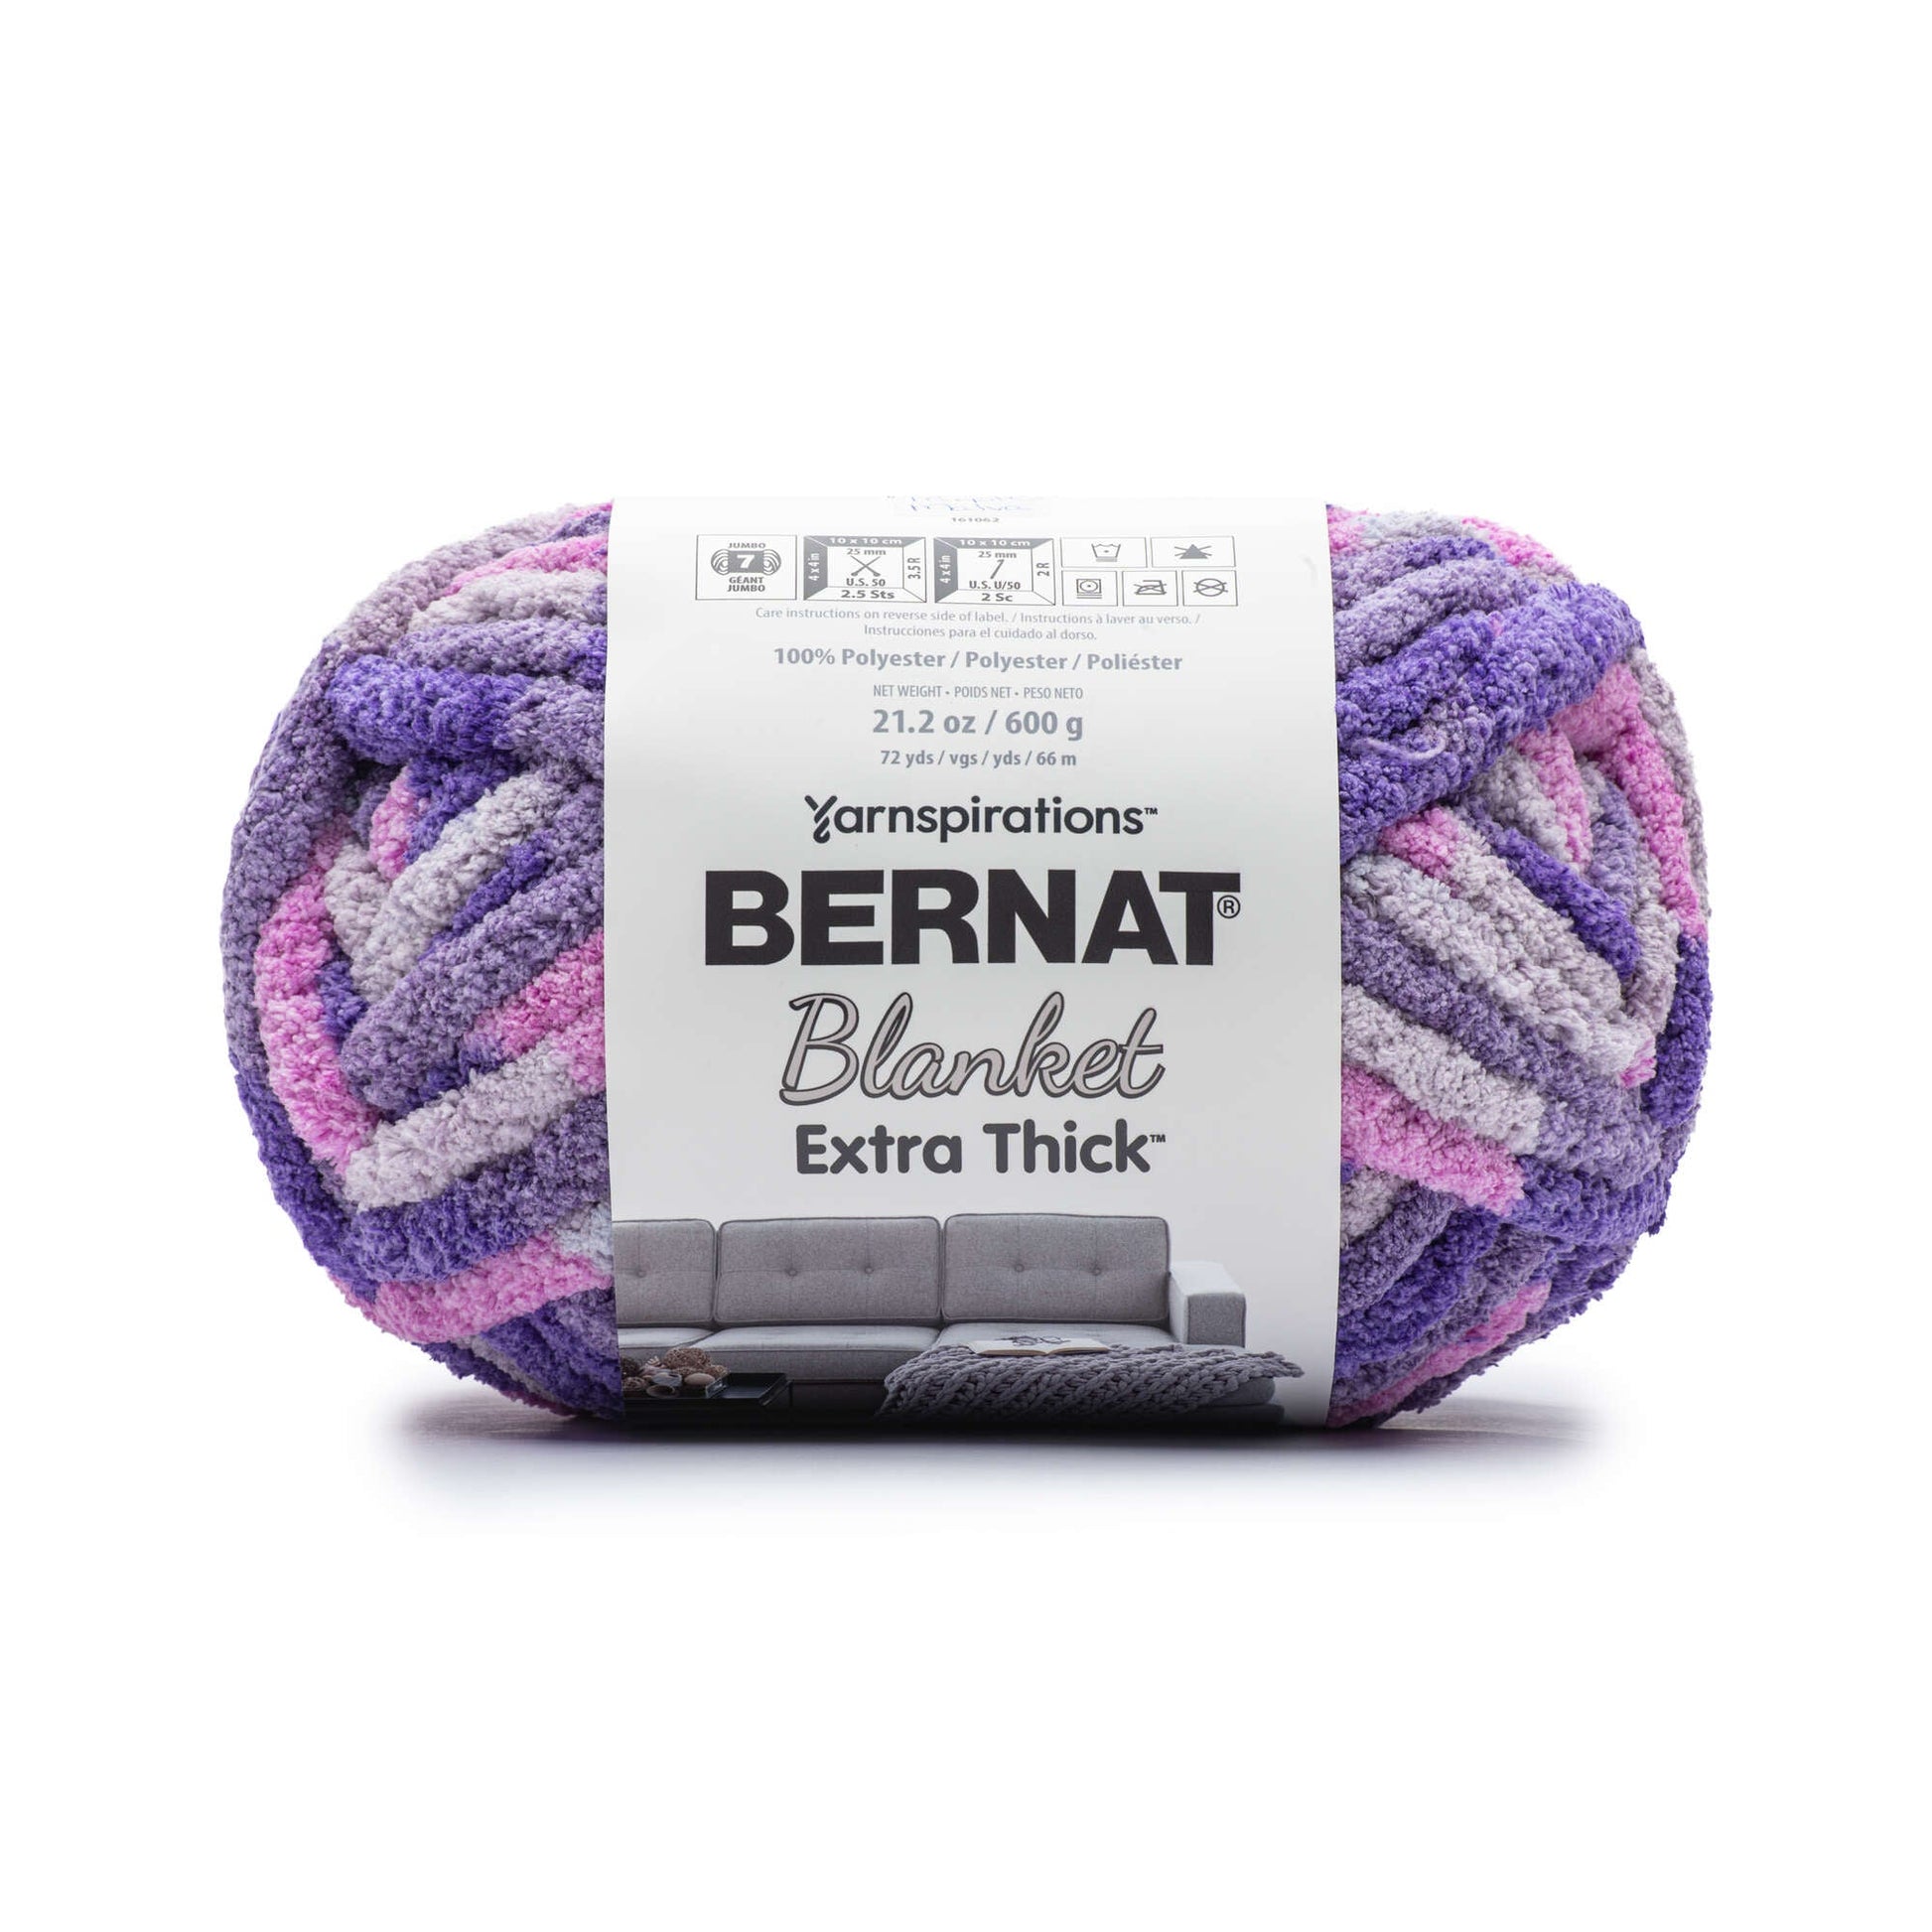 Bernat Blanket Extra Thick Yarn (600g/21.2oz) - Discontinued Shades Purple Malva